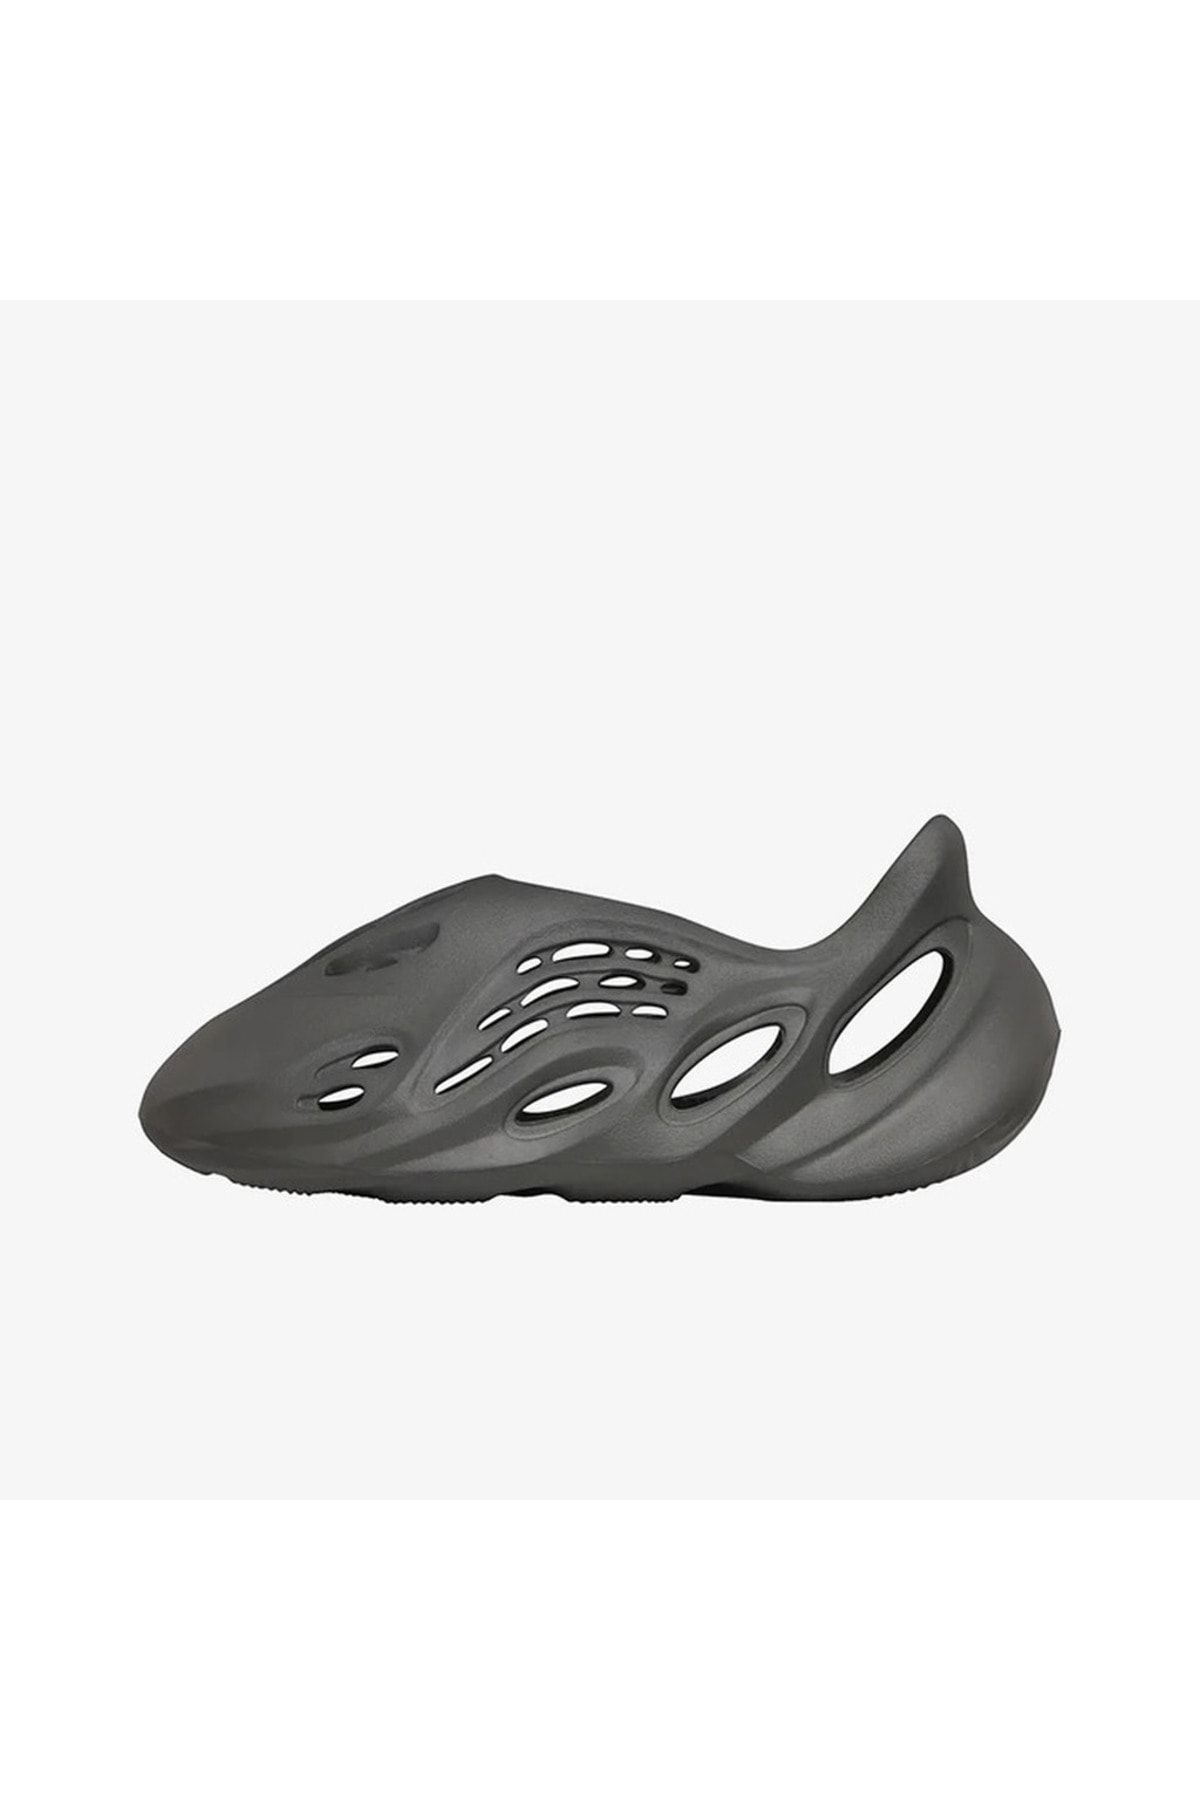 adidas Yeezy Foam Runner 'Carbon' - Trendyol